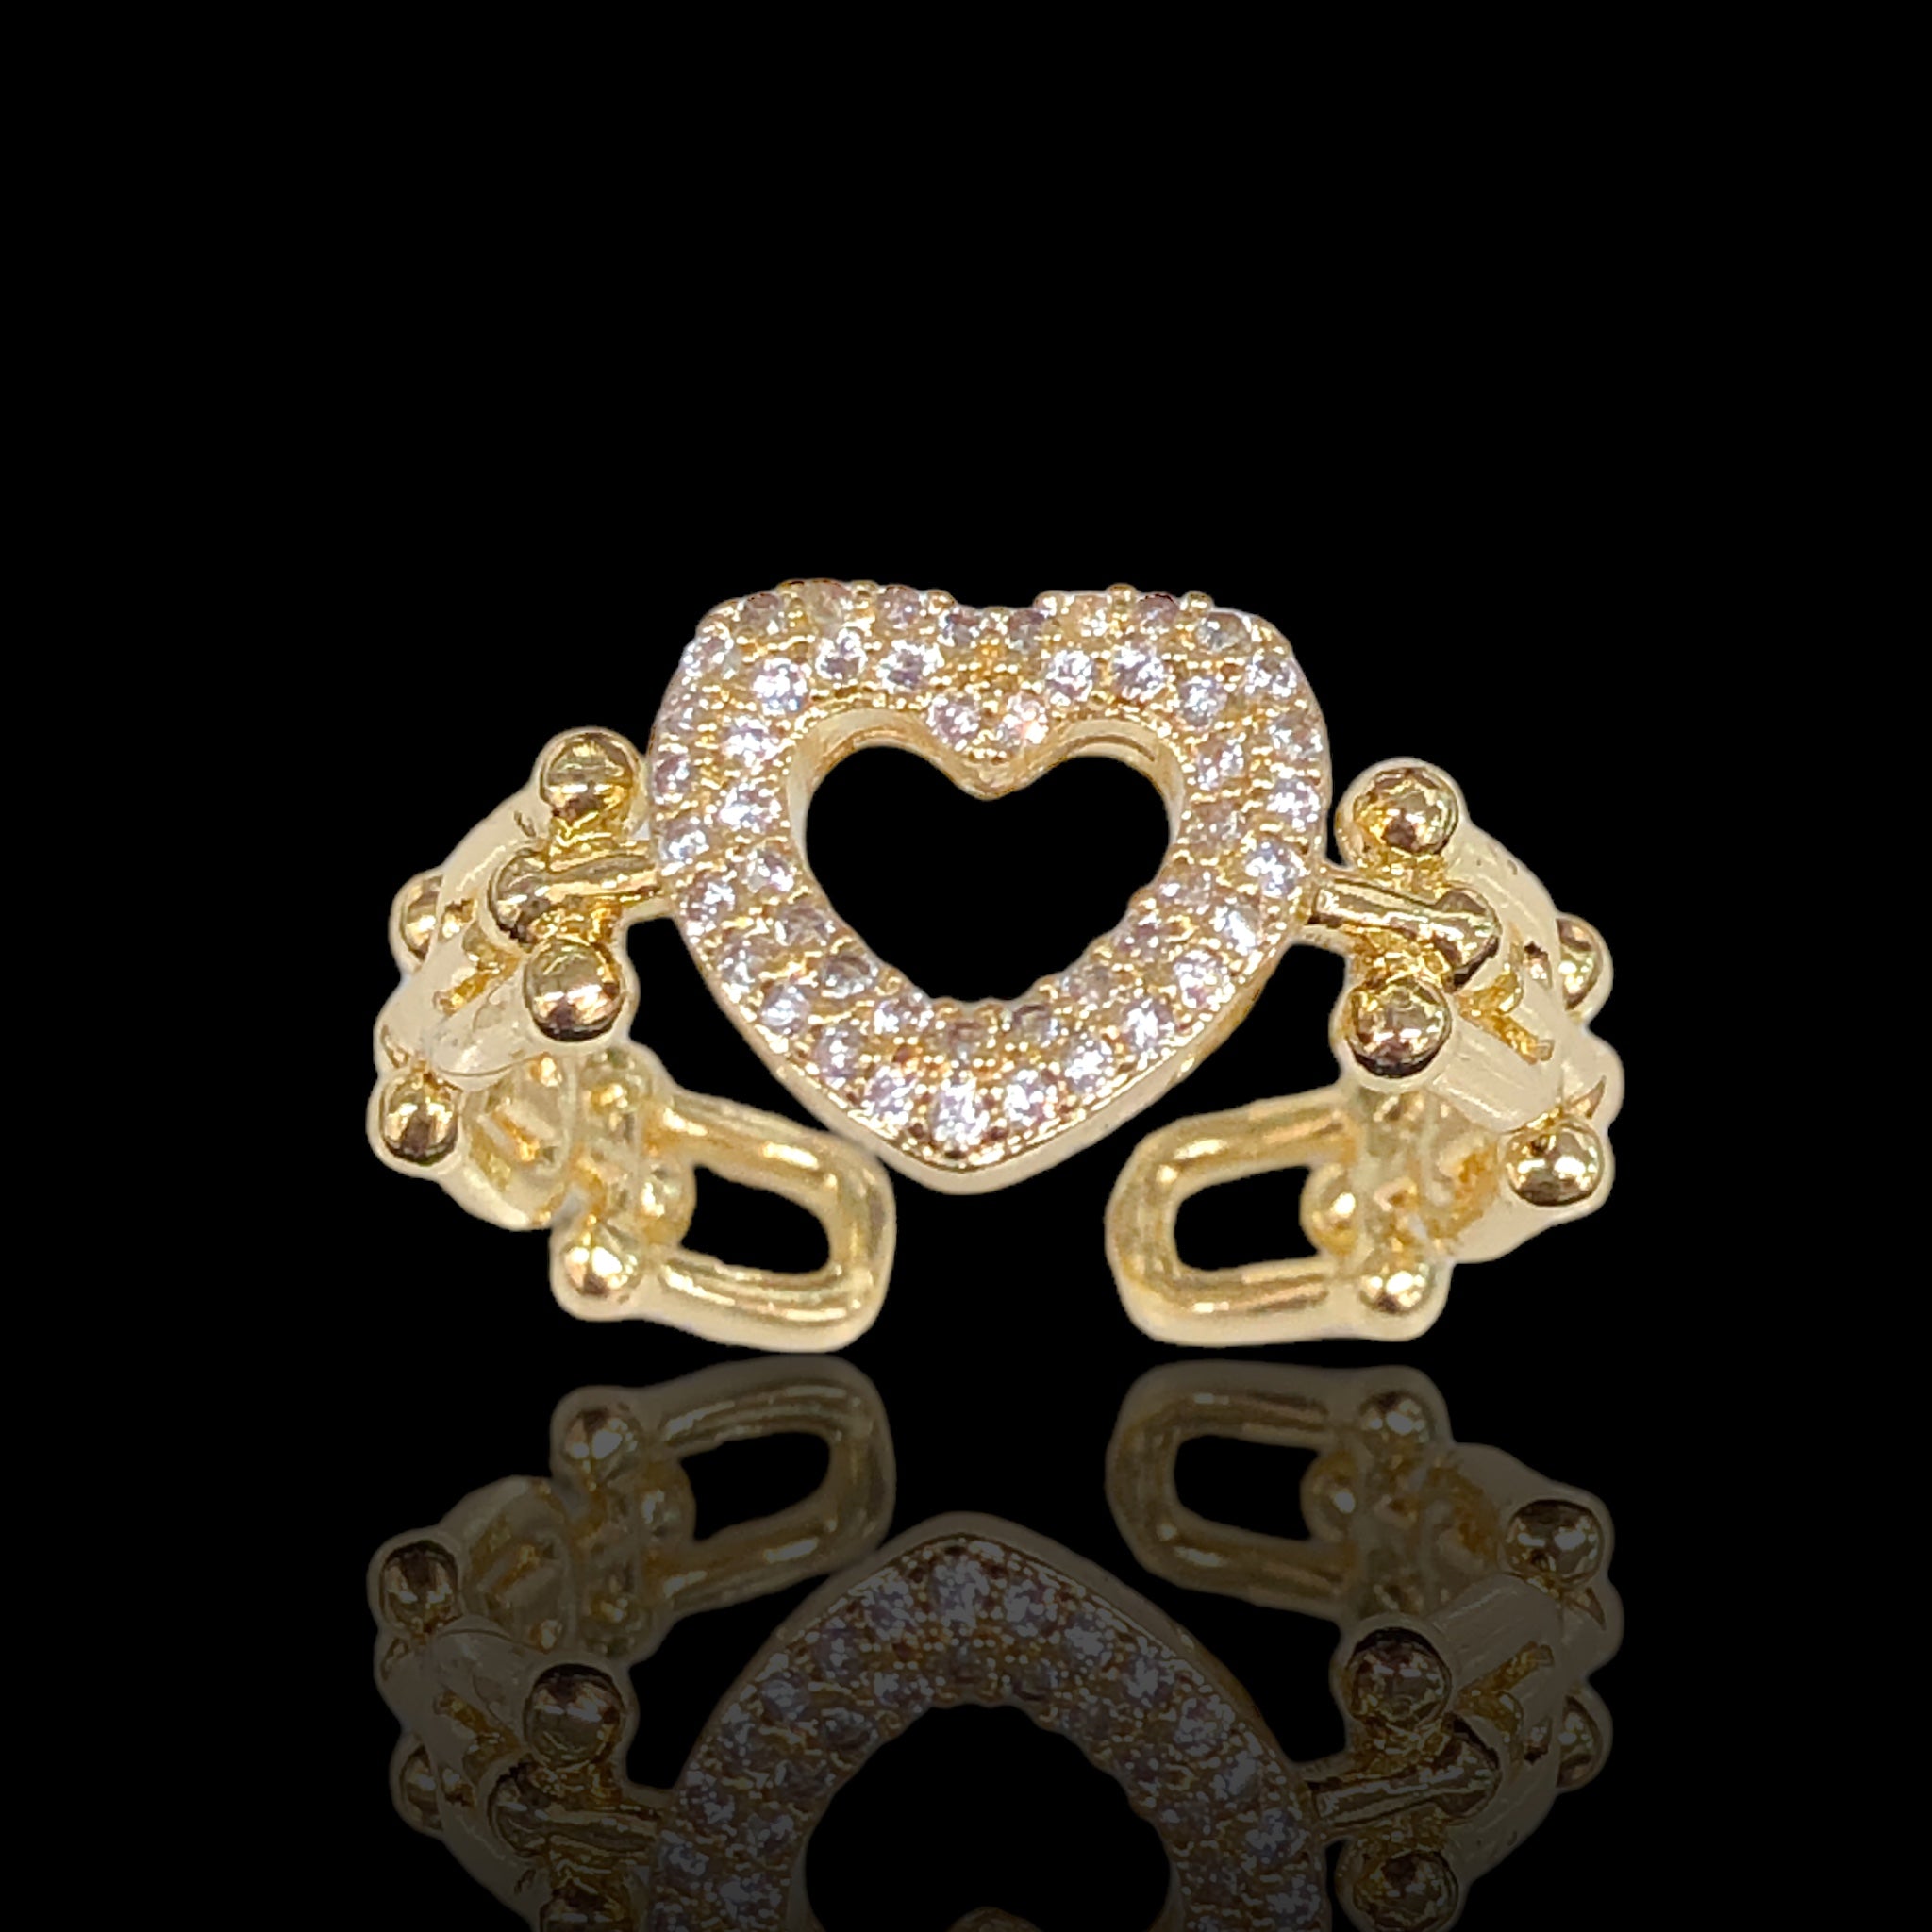 18K Gold Filled Heart of Paris Ring- Kuania oro laminado